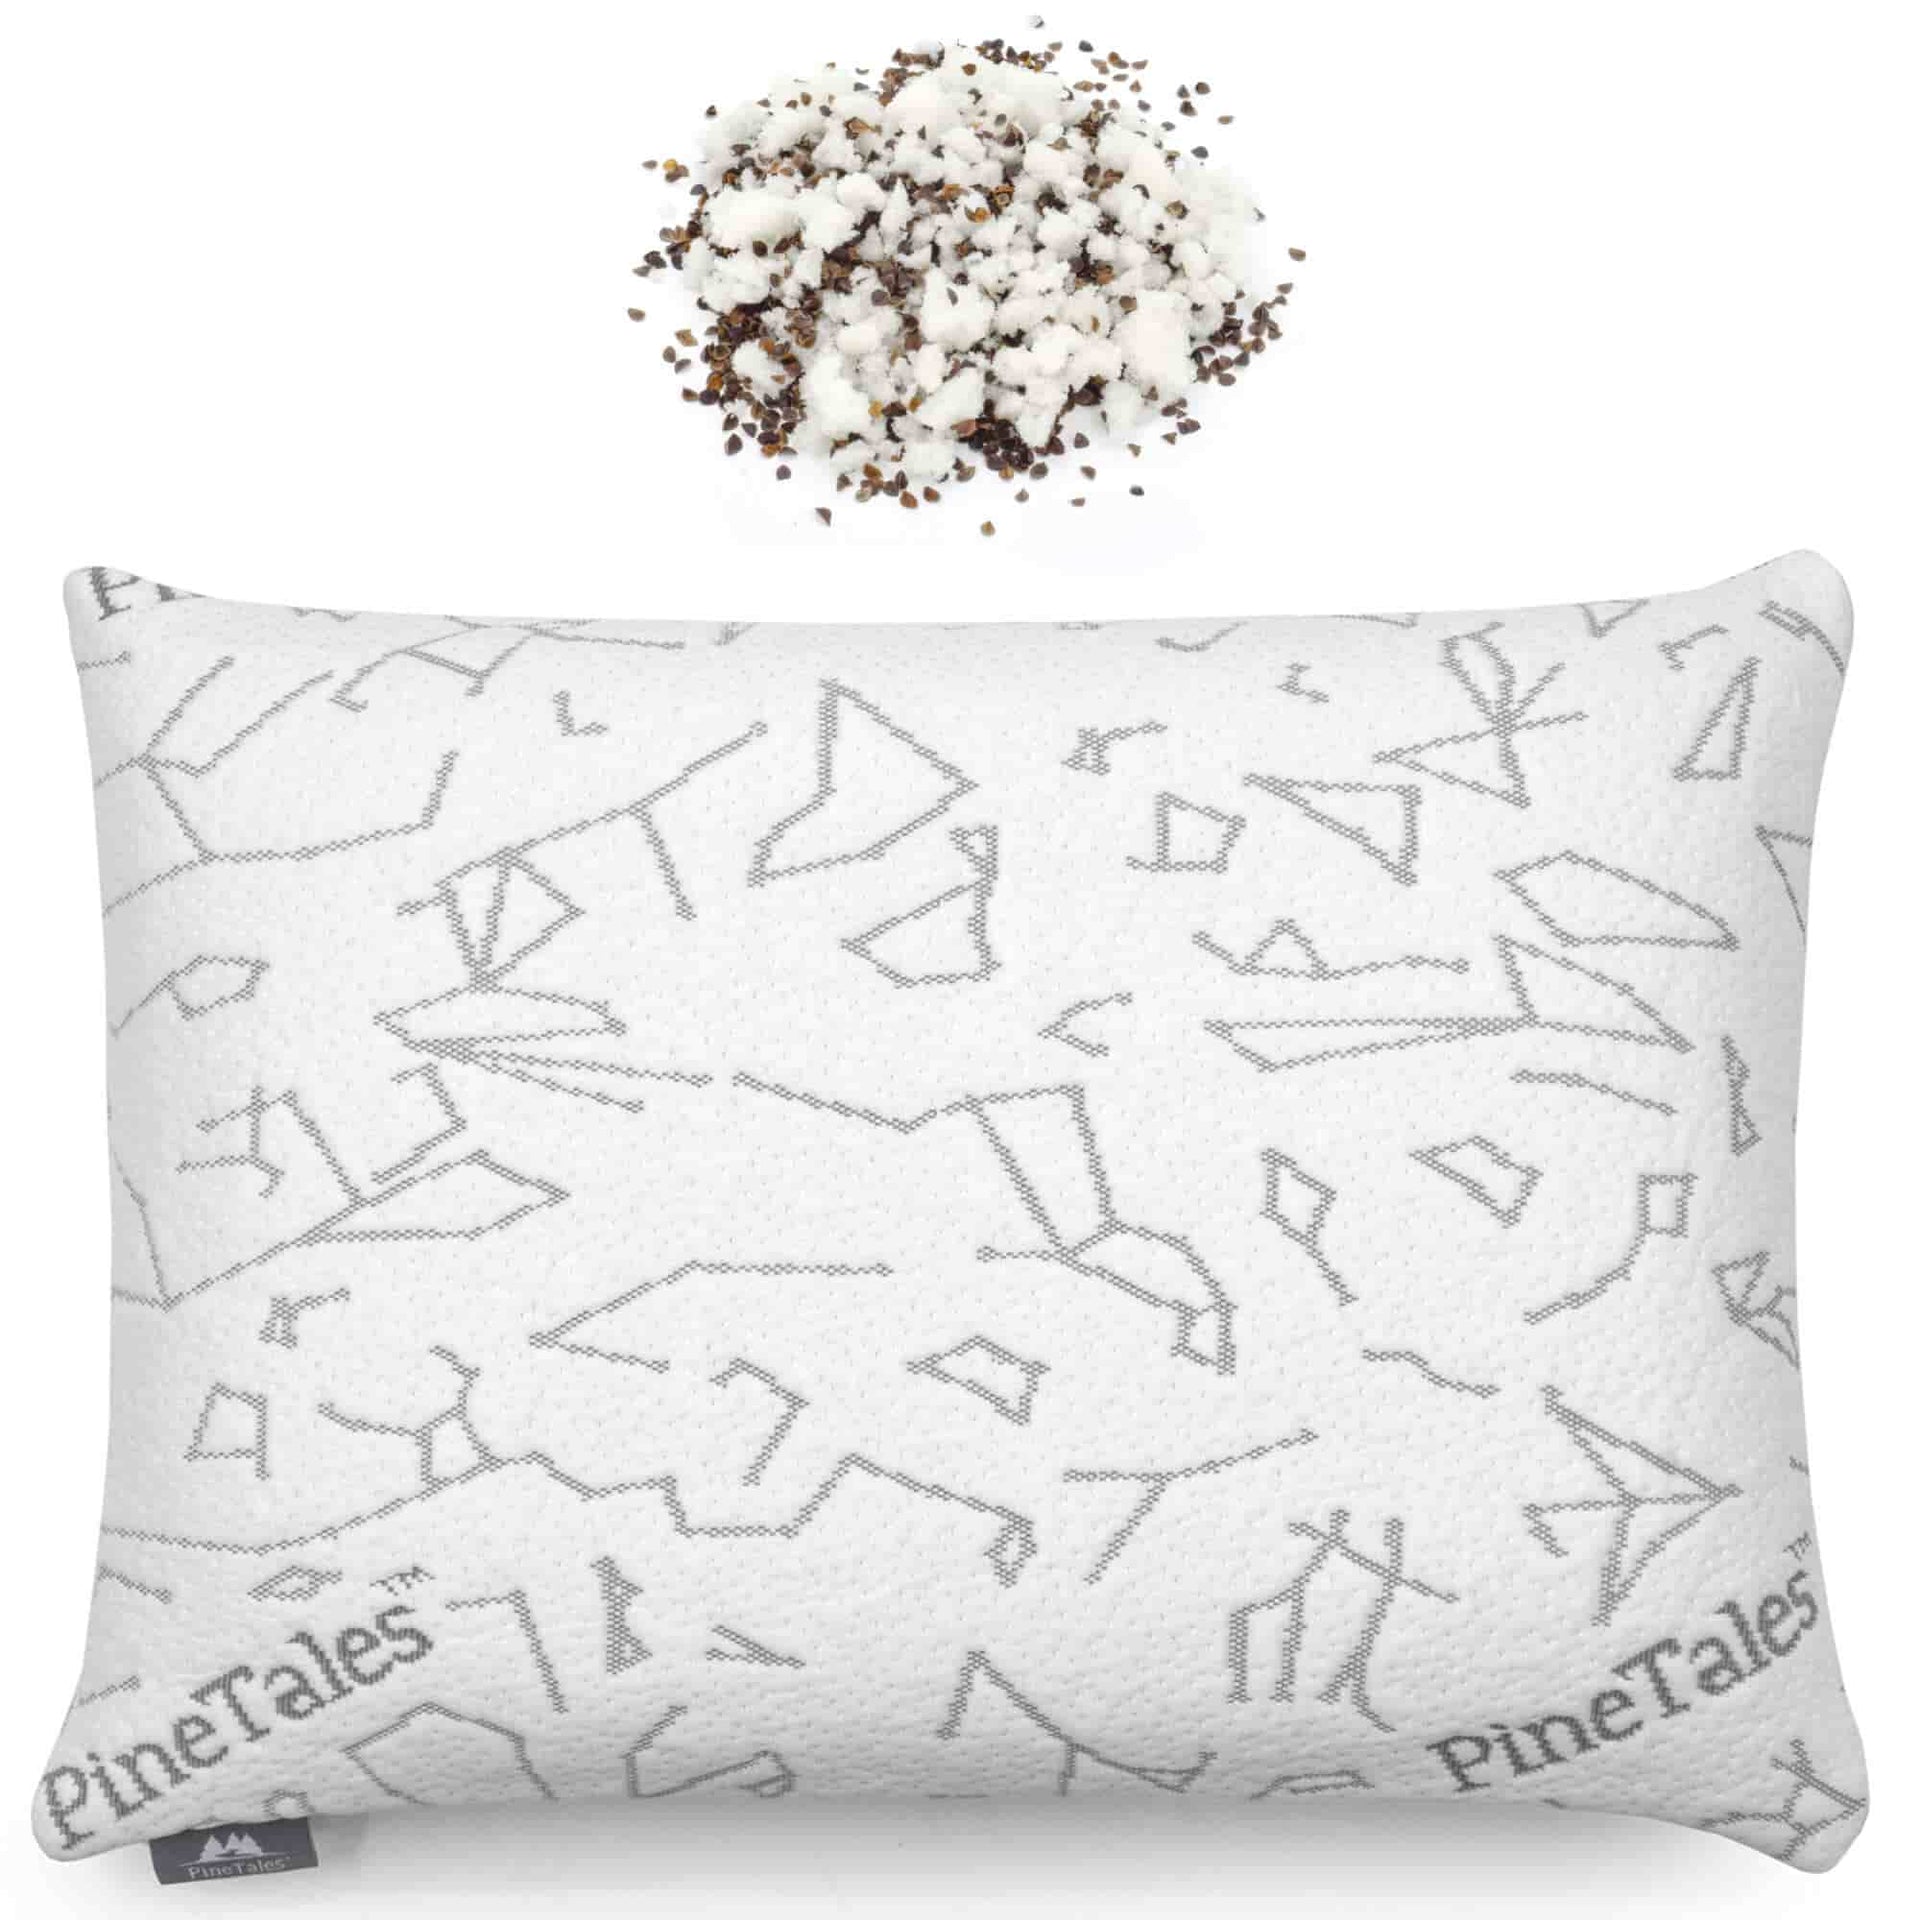 Premium Buckwheat Hulls Pillow by PineTales®